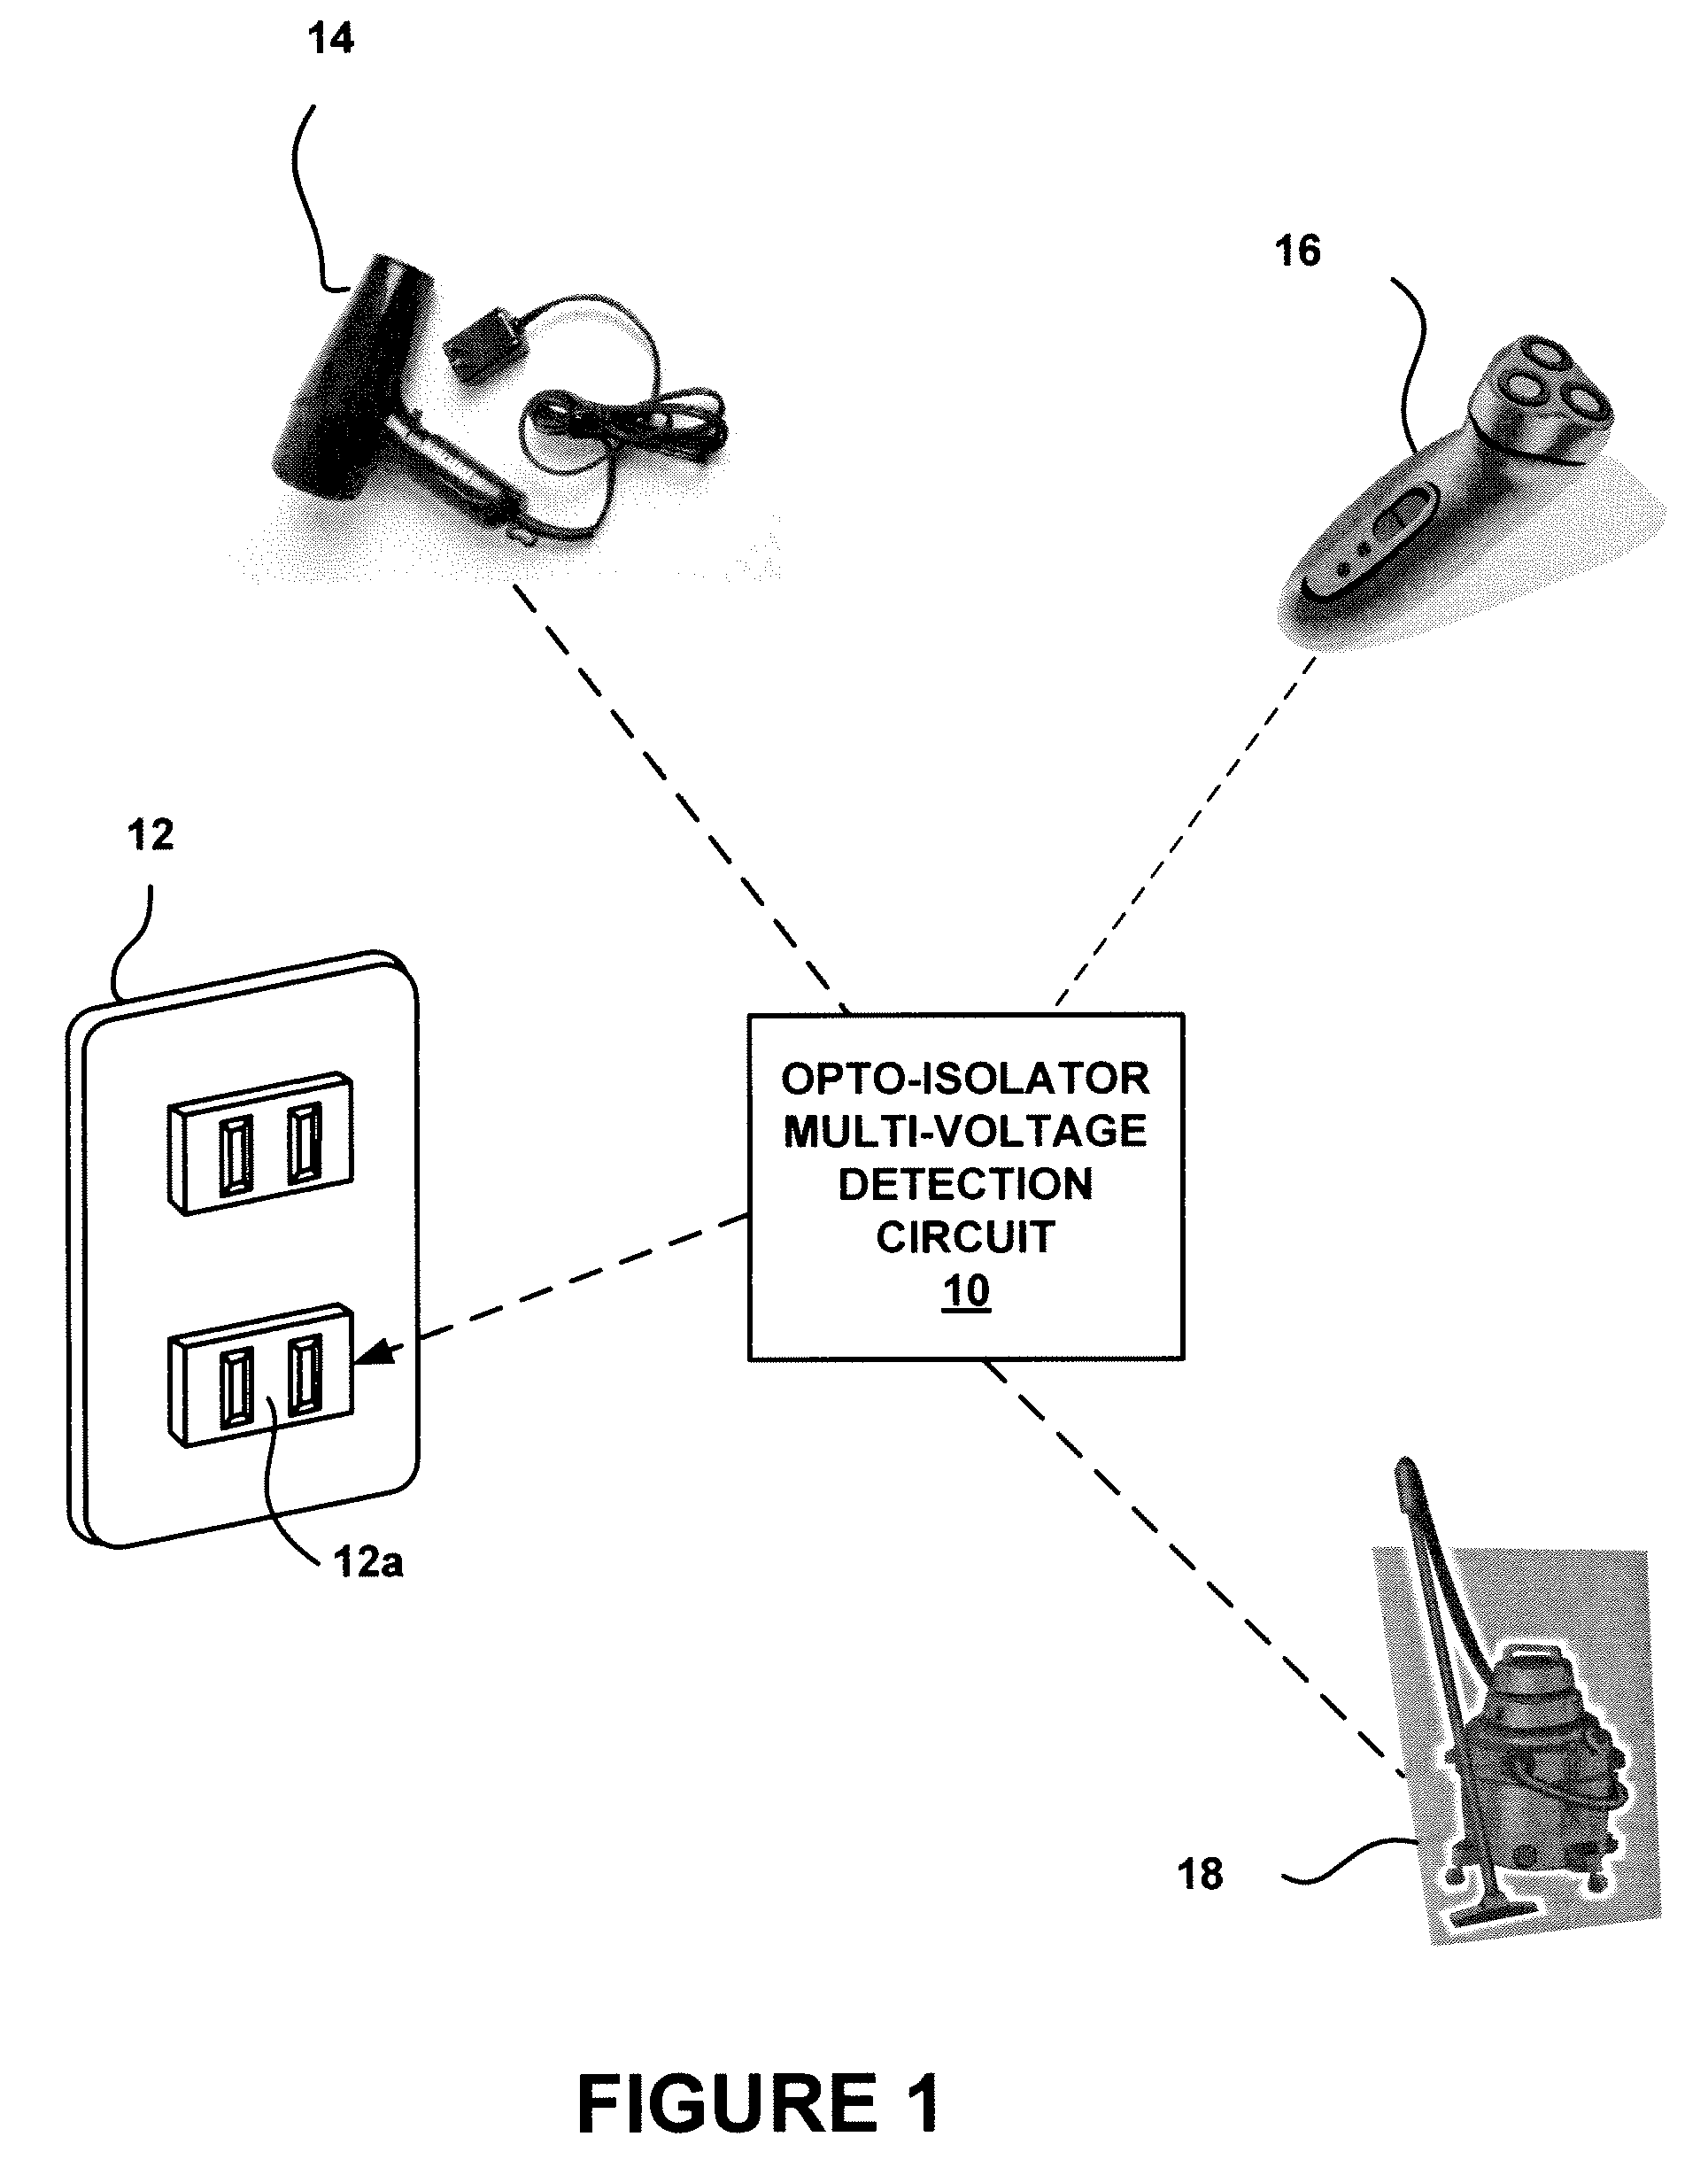 Opto-Isolator Multi-Voltage Detection Circuit